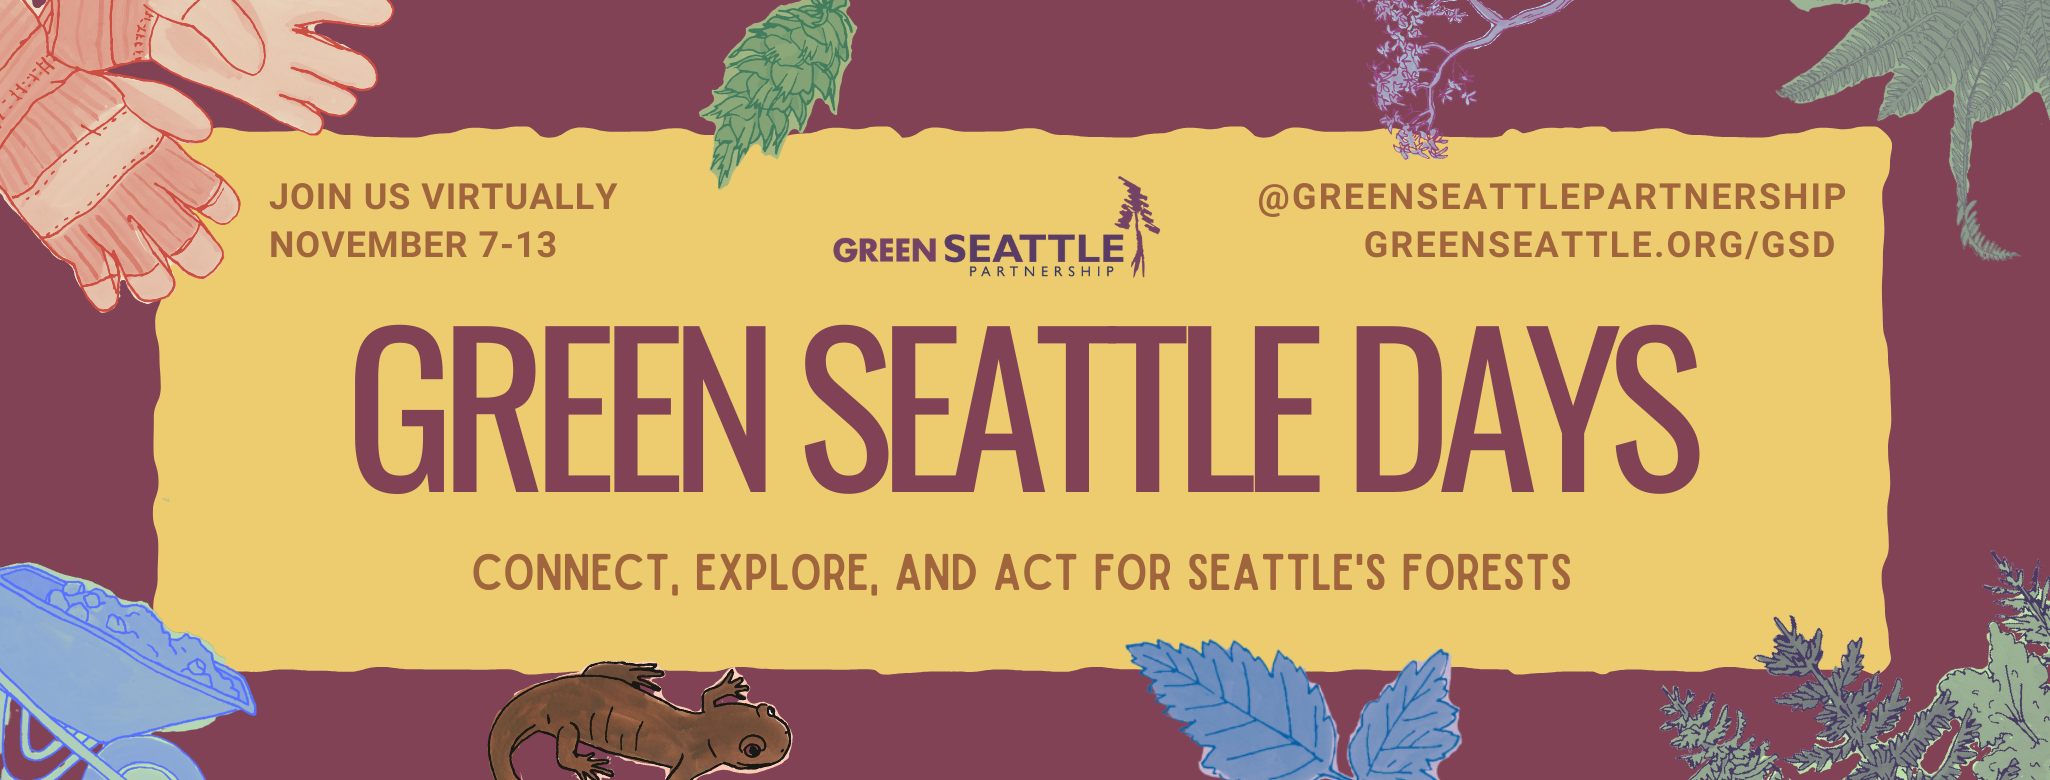 Green Seattle Day Green Seattle Partnership